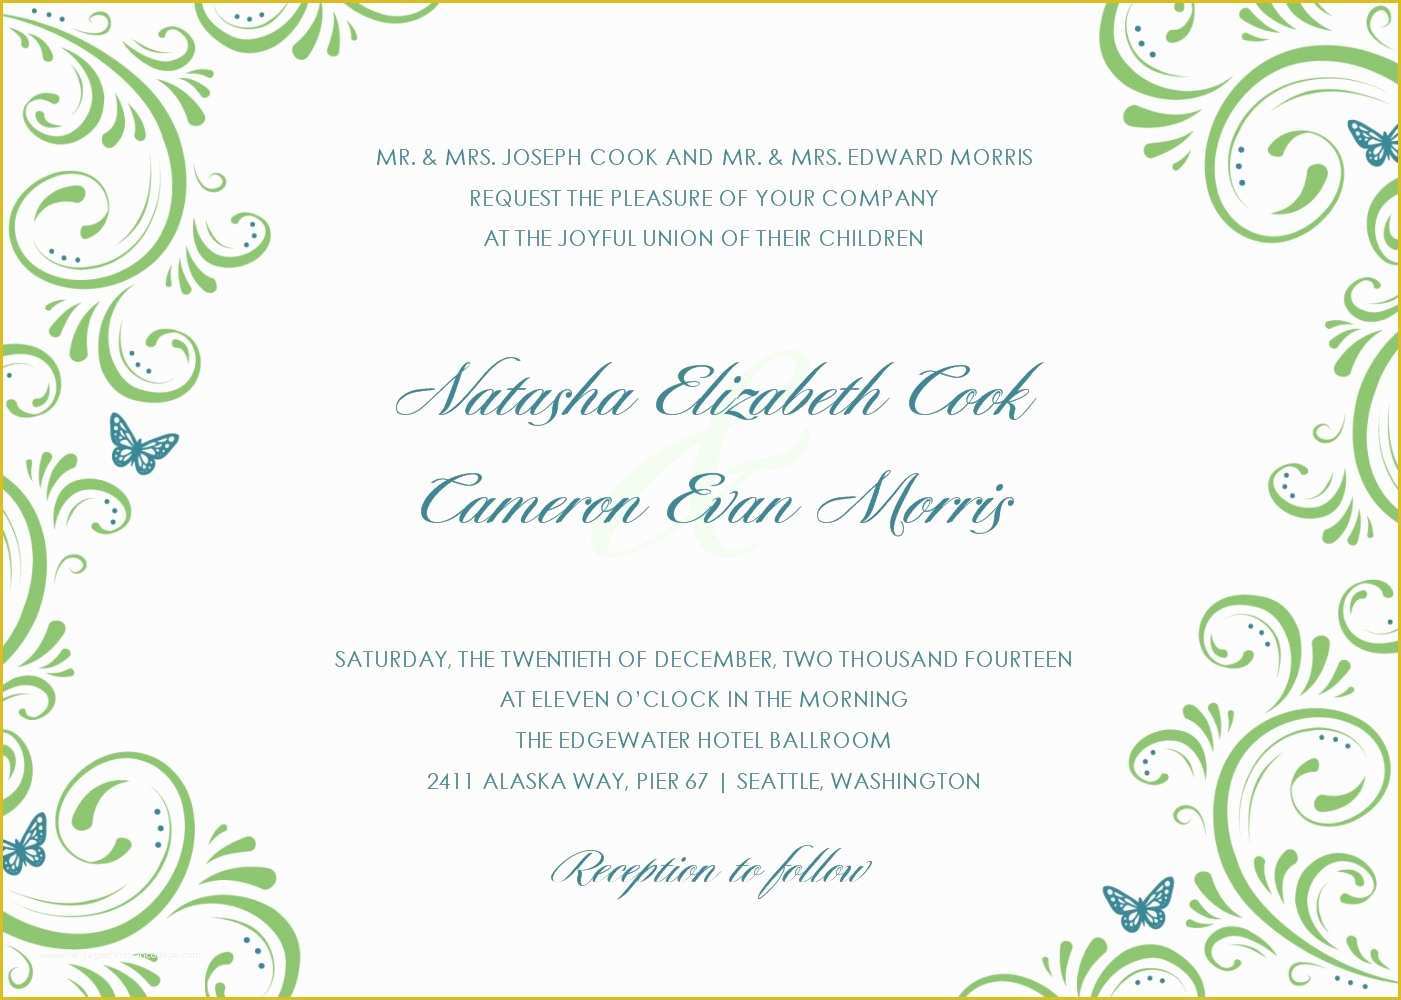 Wedding Invitation Design Templates Free Download Of Applying the Wedding Planning Templates